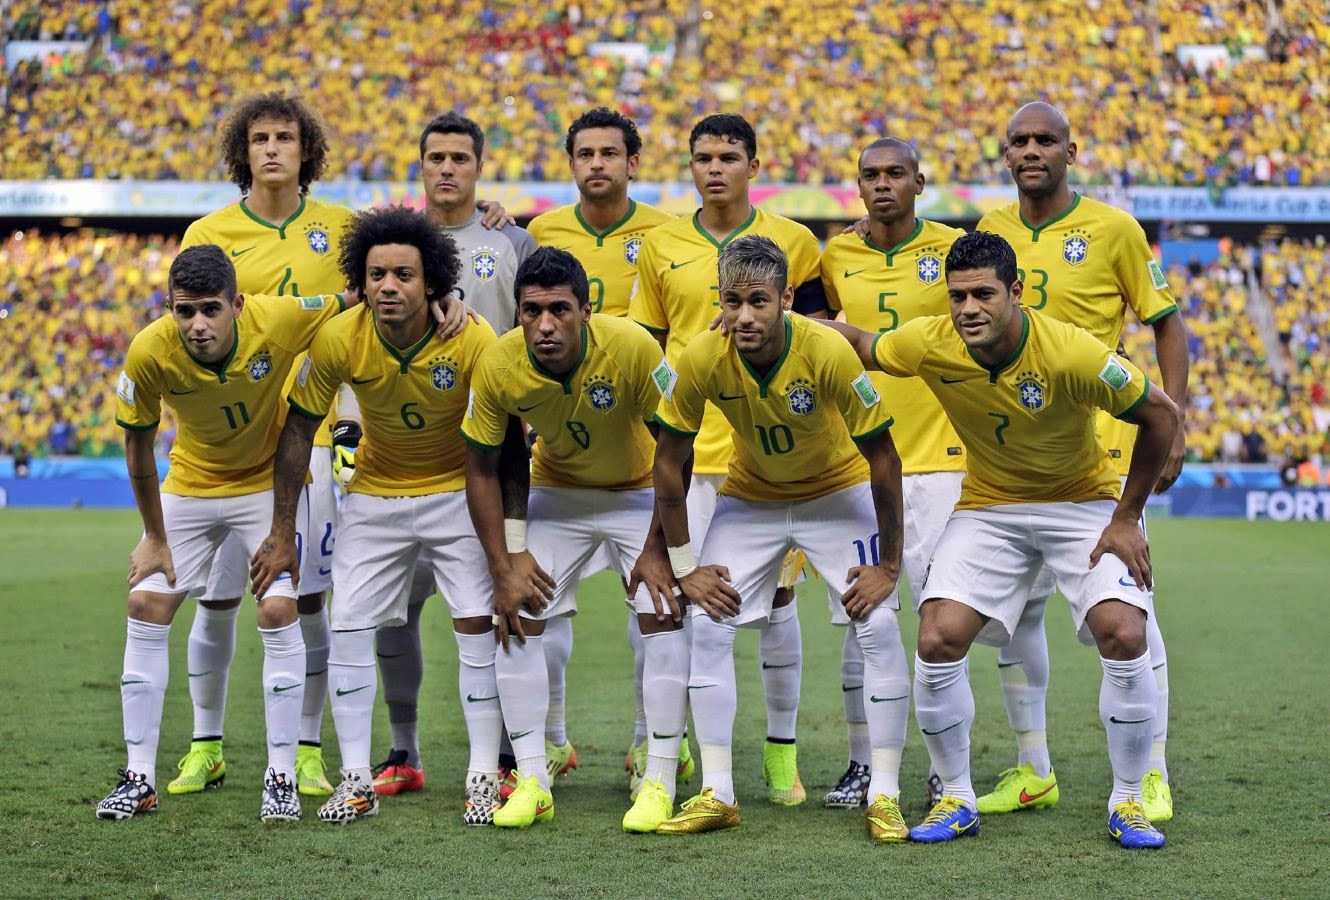 Fifa World Cup 2018 Brazil Canarinho Team overview